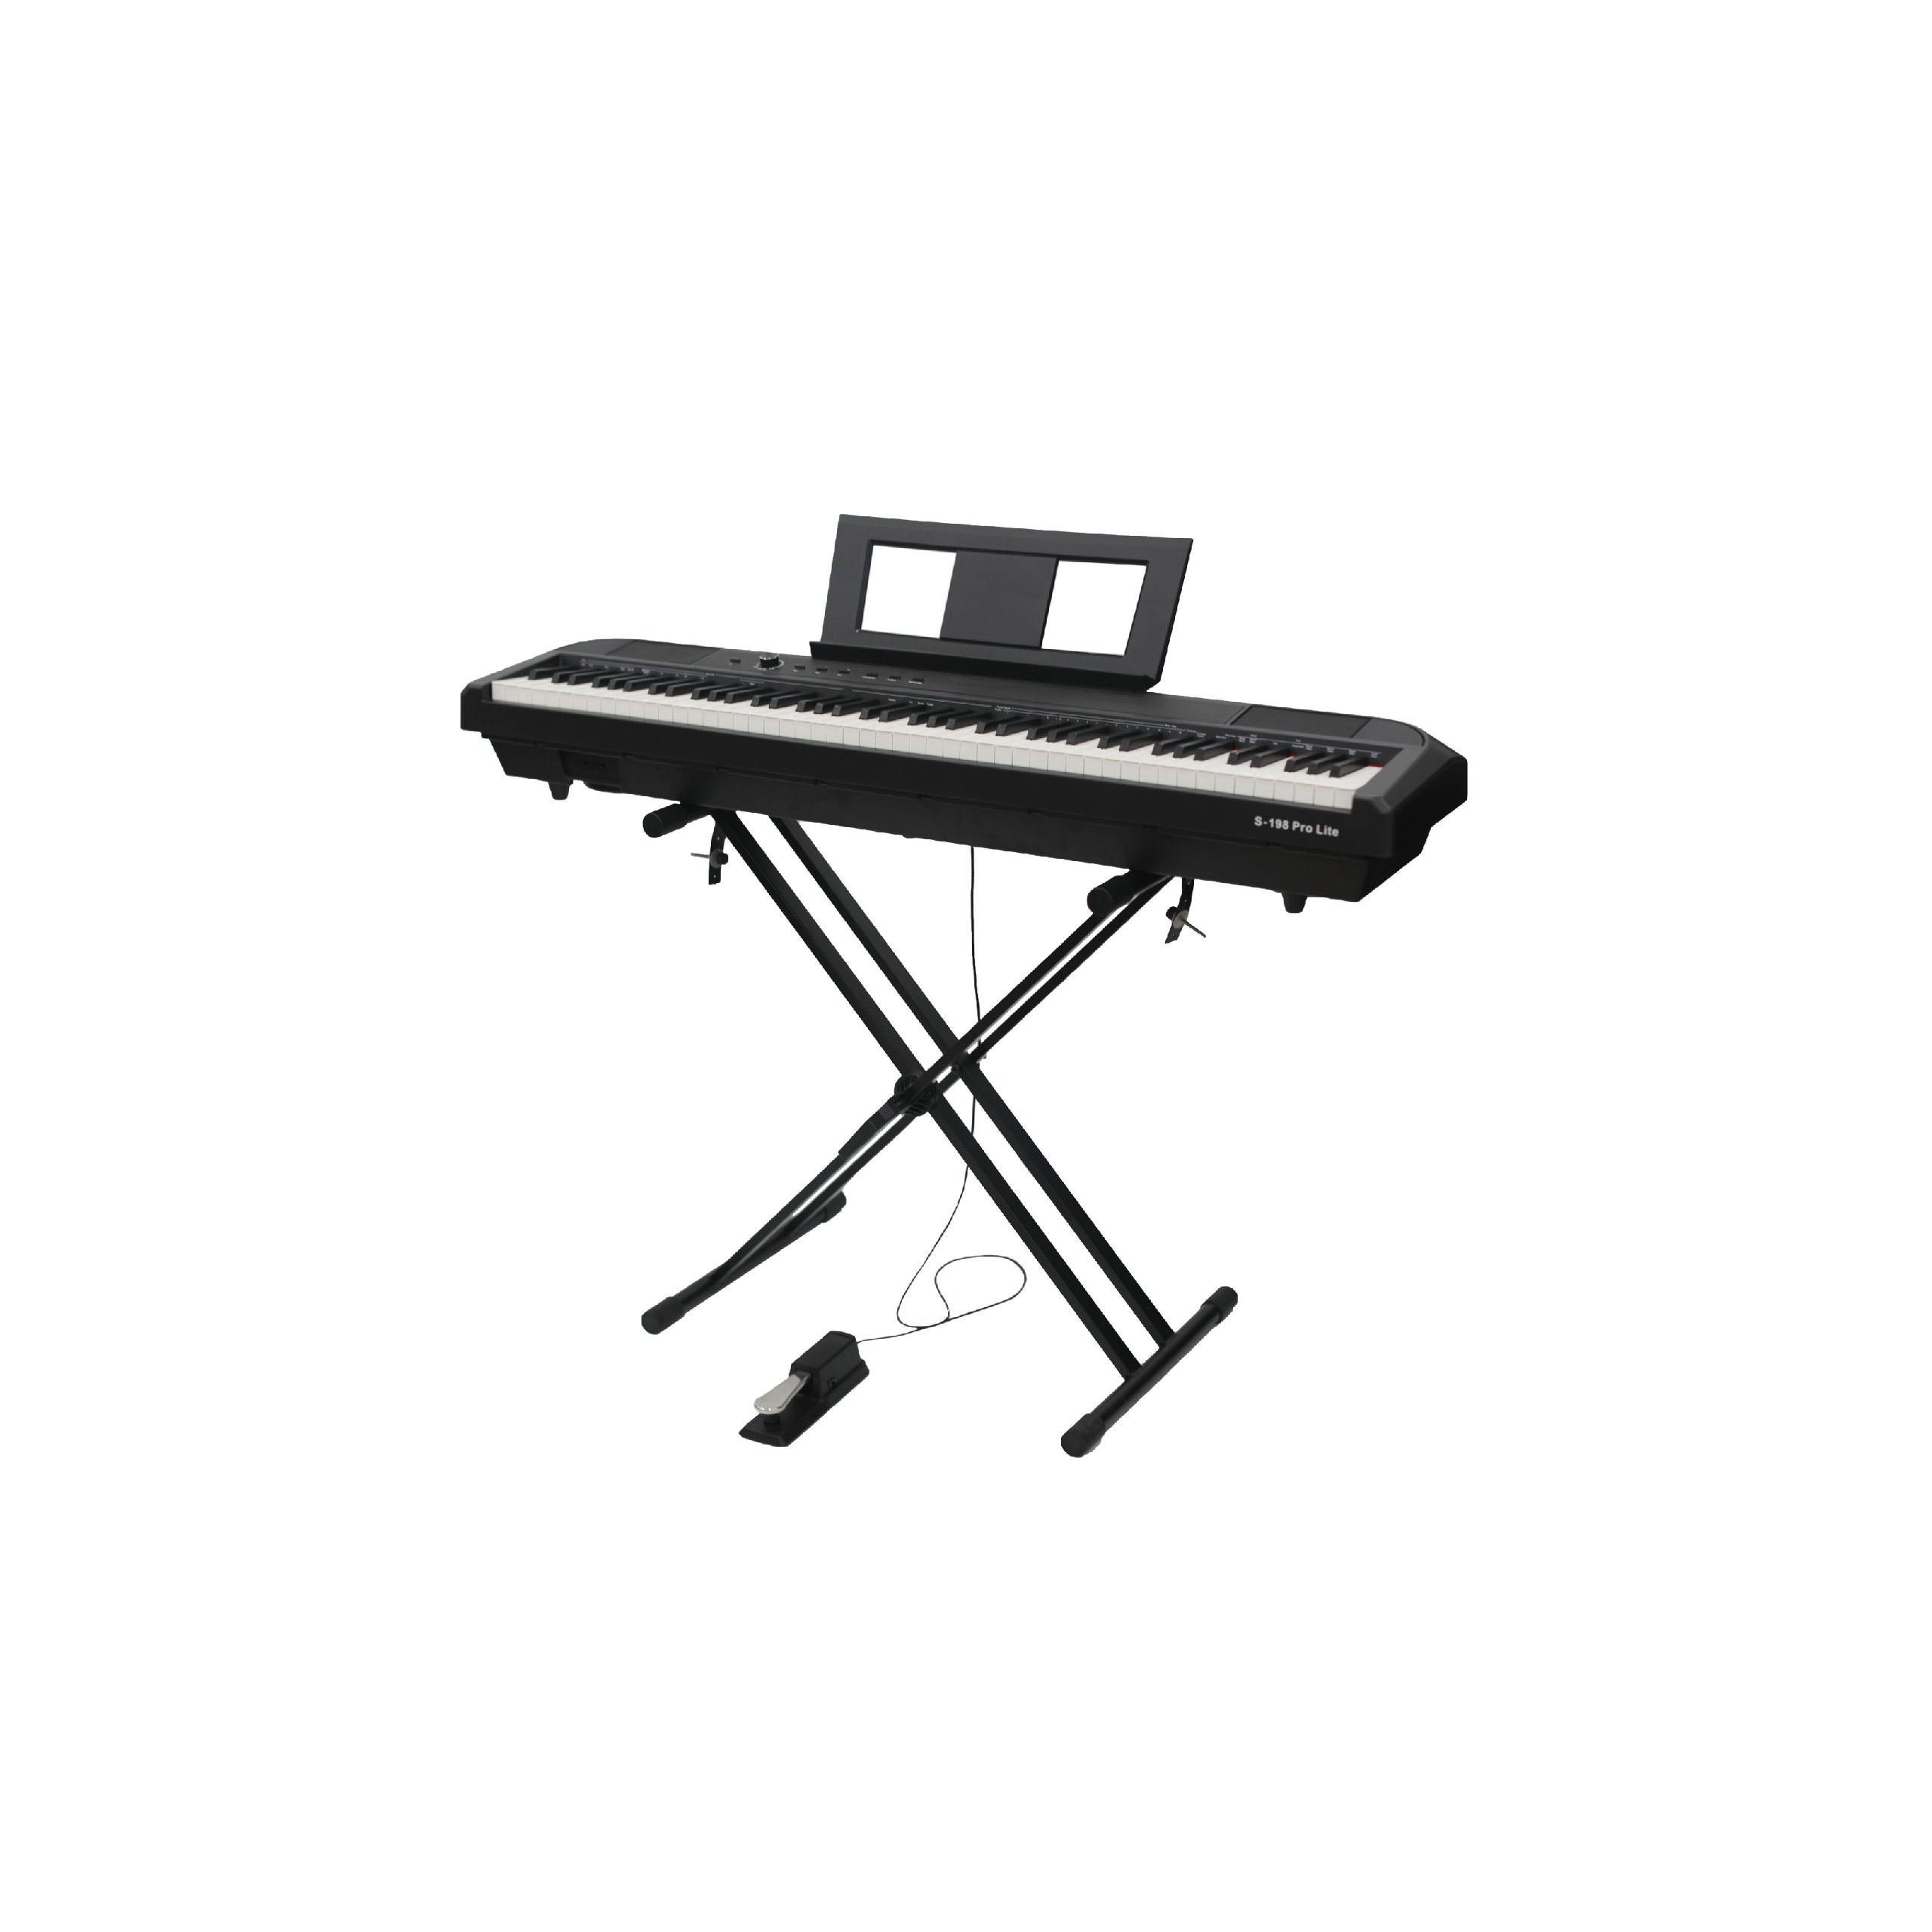 BEISITE B-189 Pro Lite 4 Компактное Цифровое пианино